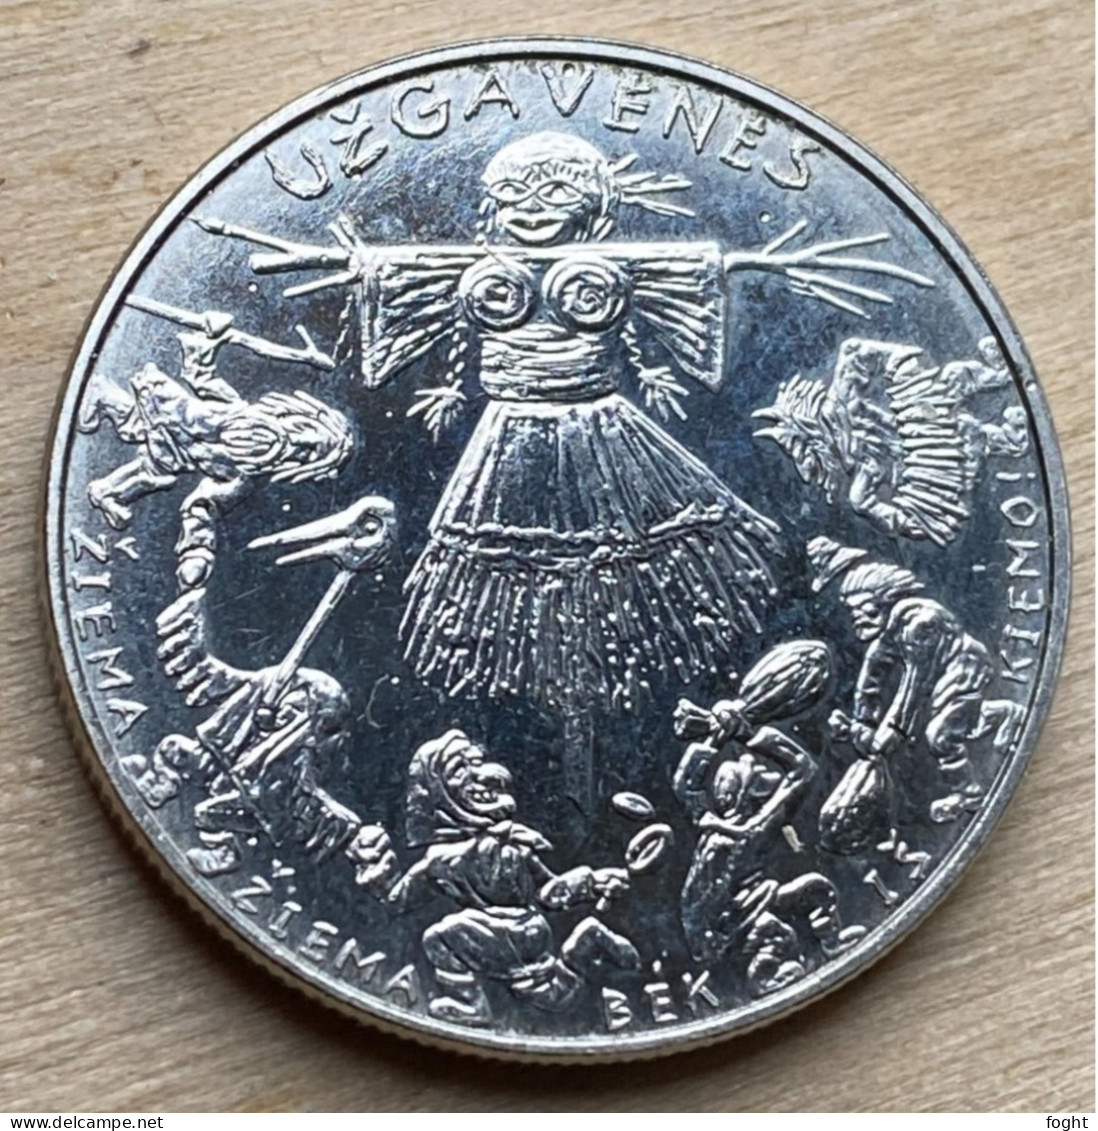 2019 LMK Lithuania "Traditional Lithuanian Celebrations" 1.5 Euro Coin,KM#234,7119 - Lituanie